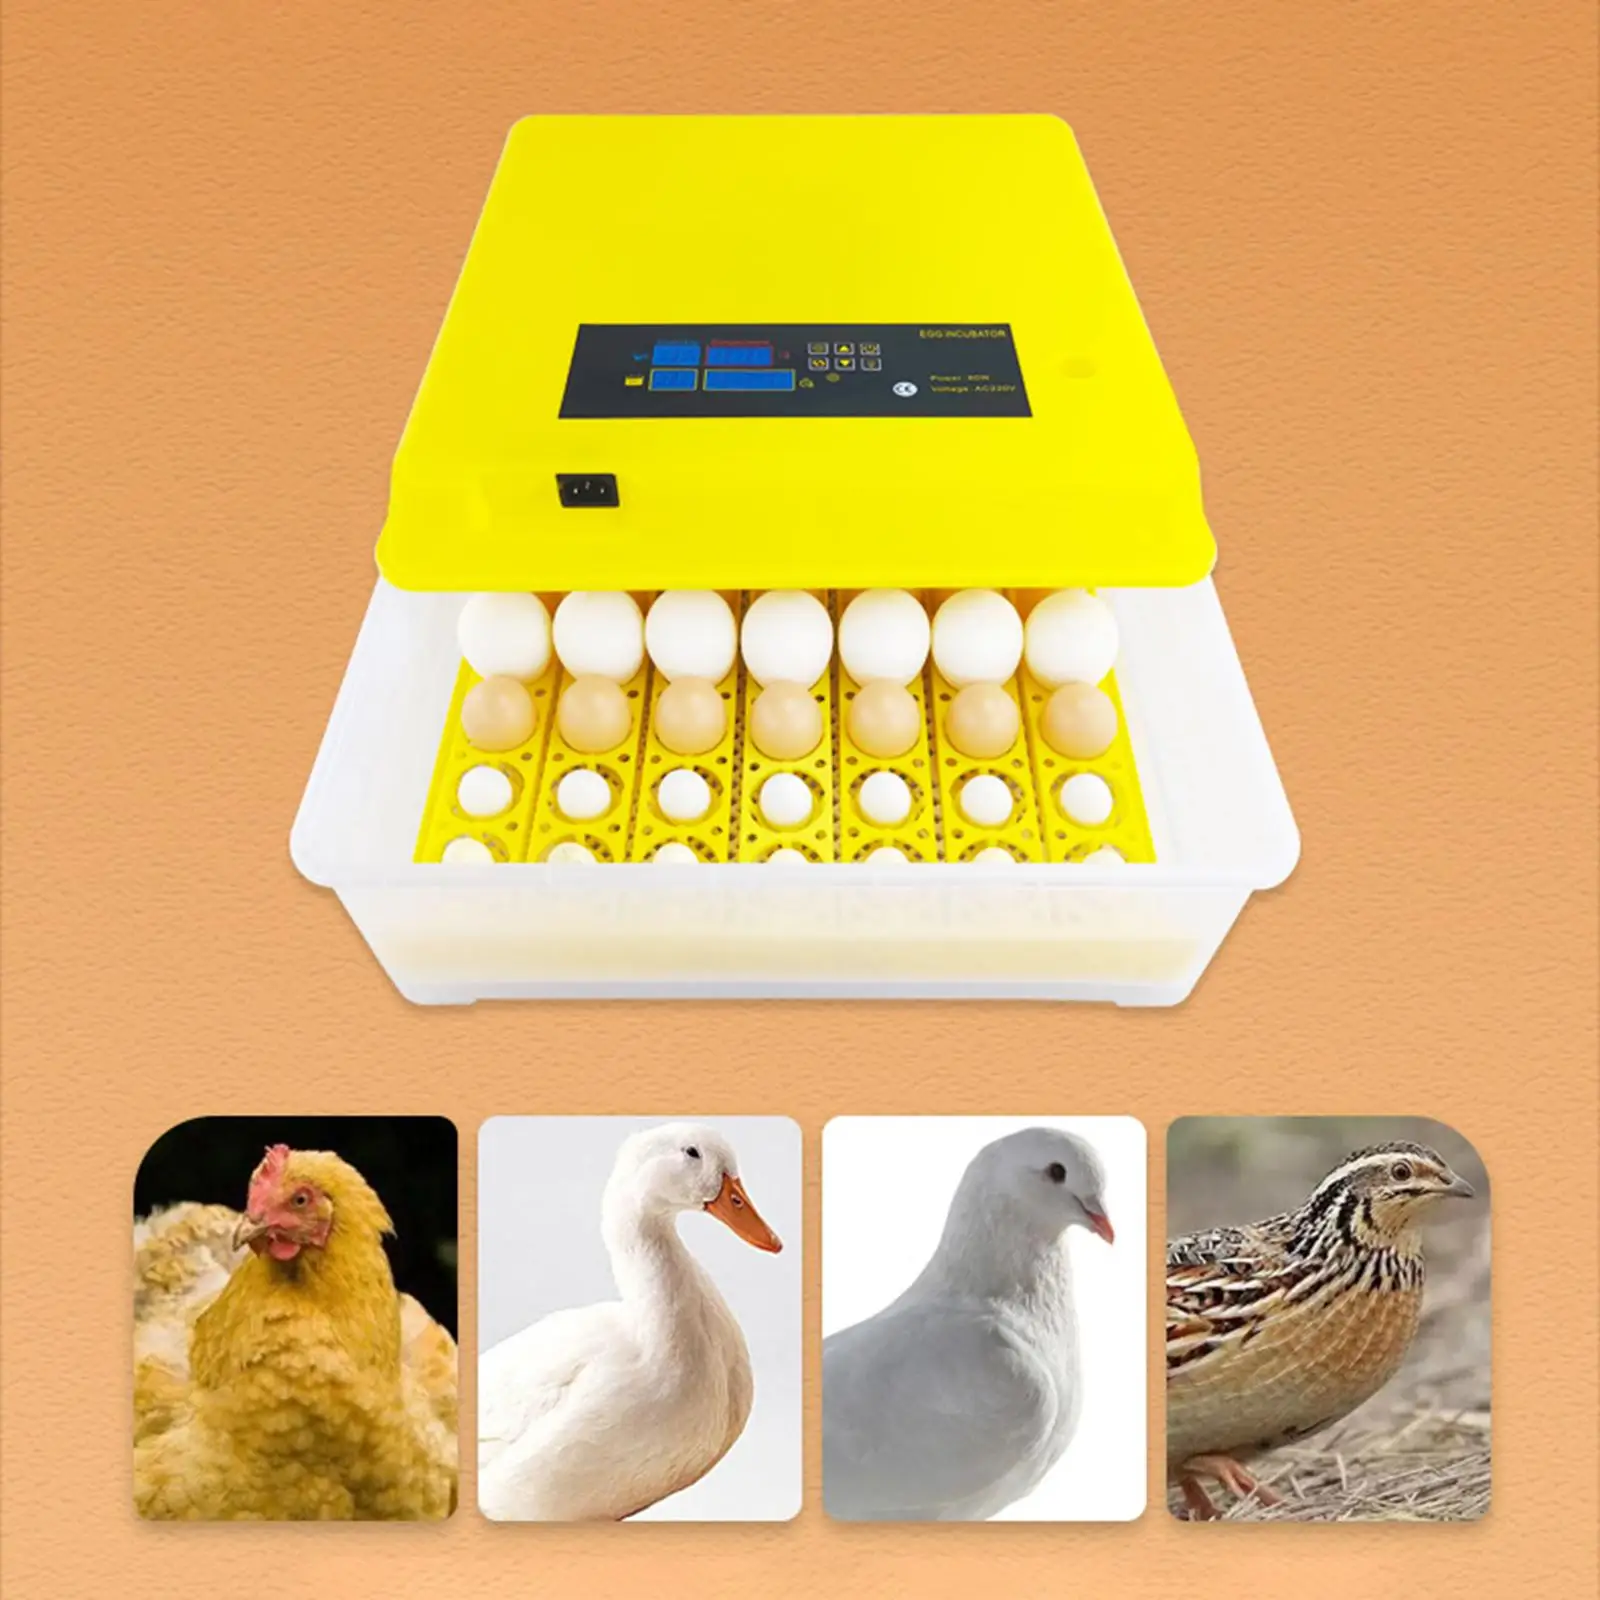 Digital Egg Incubator Brooding Machine Temperature and Humidity Control Egg Turner Farm Egg Incubator for Turkey Birds Hatching